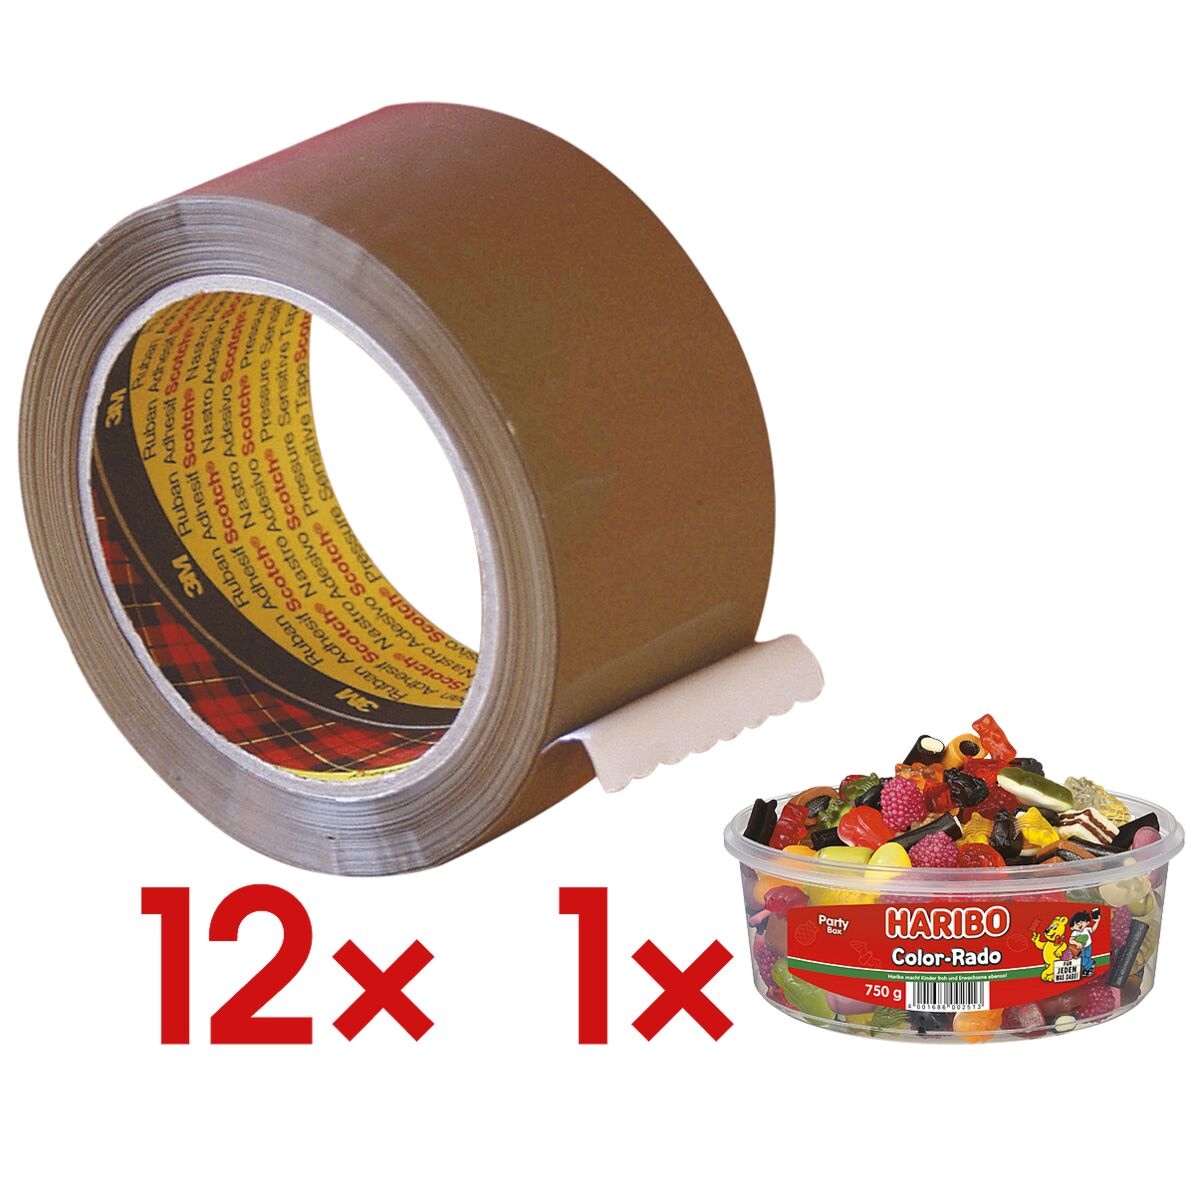 12x Packband Scotch Premium, 50 mm breit, 66 Meter lang - leise abrollbar inkl. Fruchtgummi Color-Rado Party Box 750 g